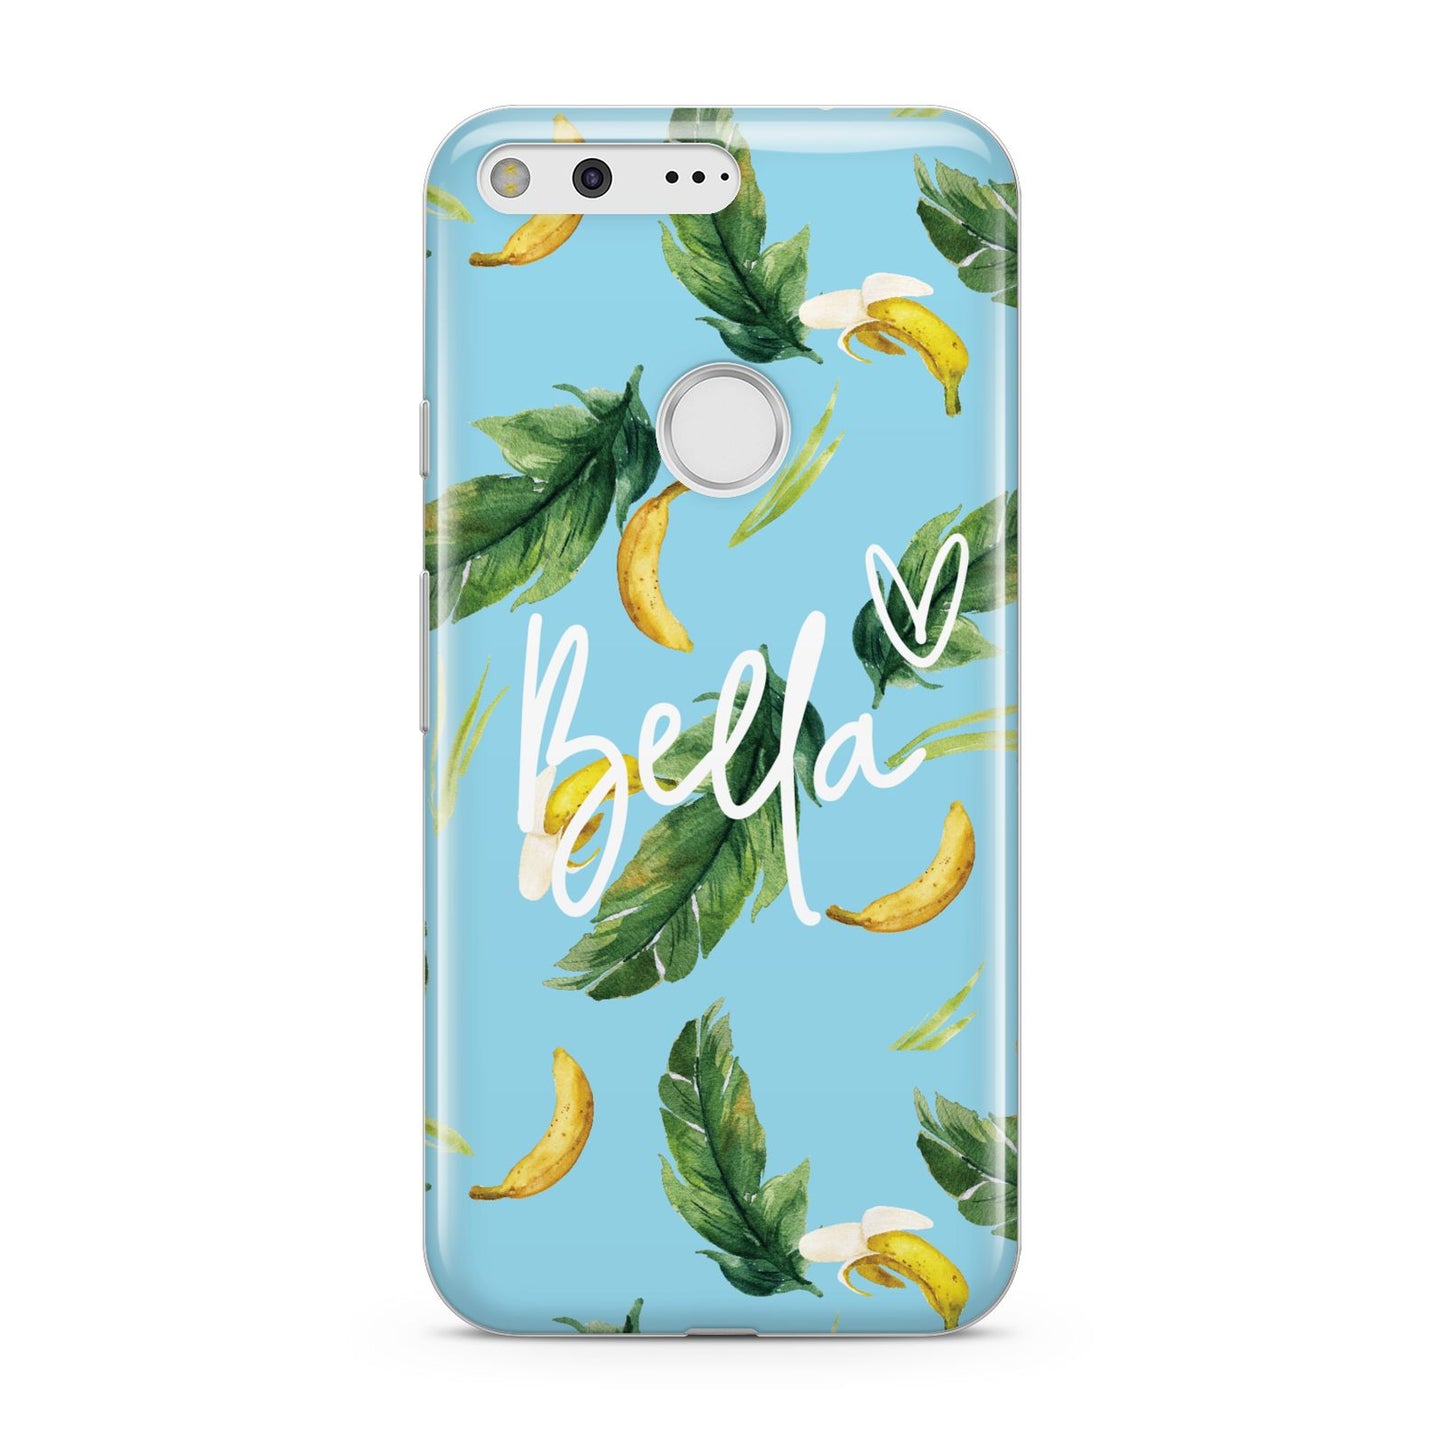 Personalised Blue Banana Tropical Google Pixel Case